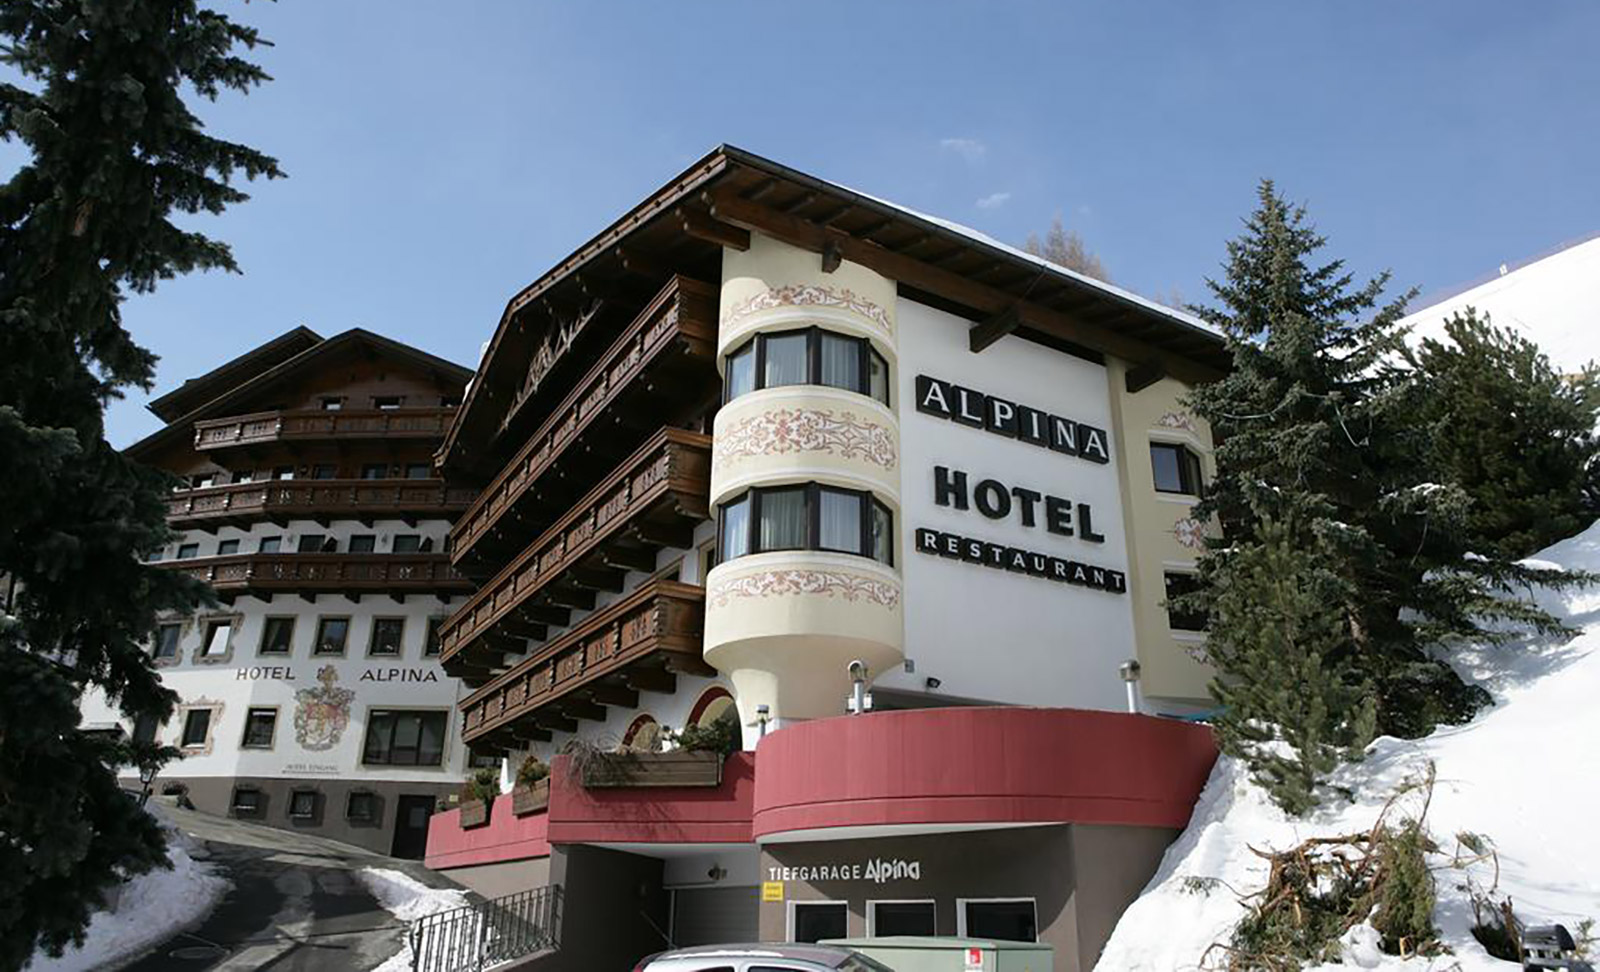 SNOWS - Hotel Alpina